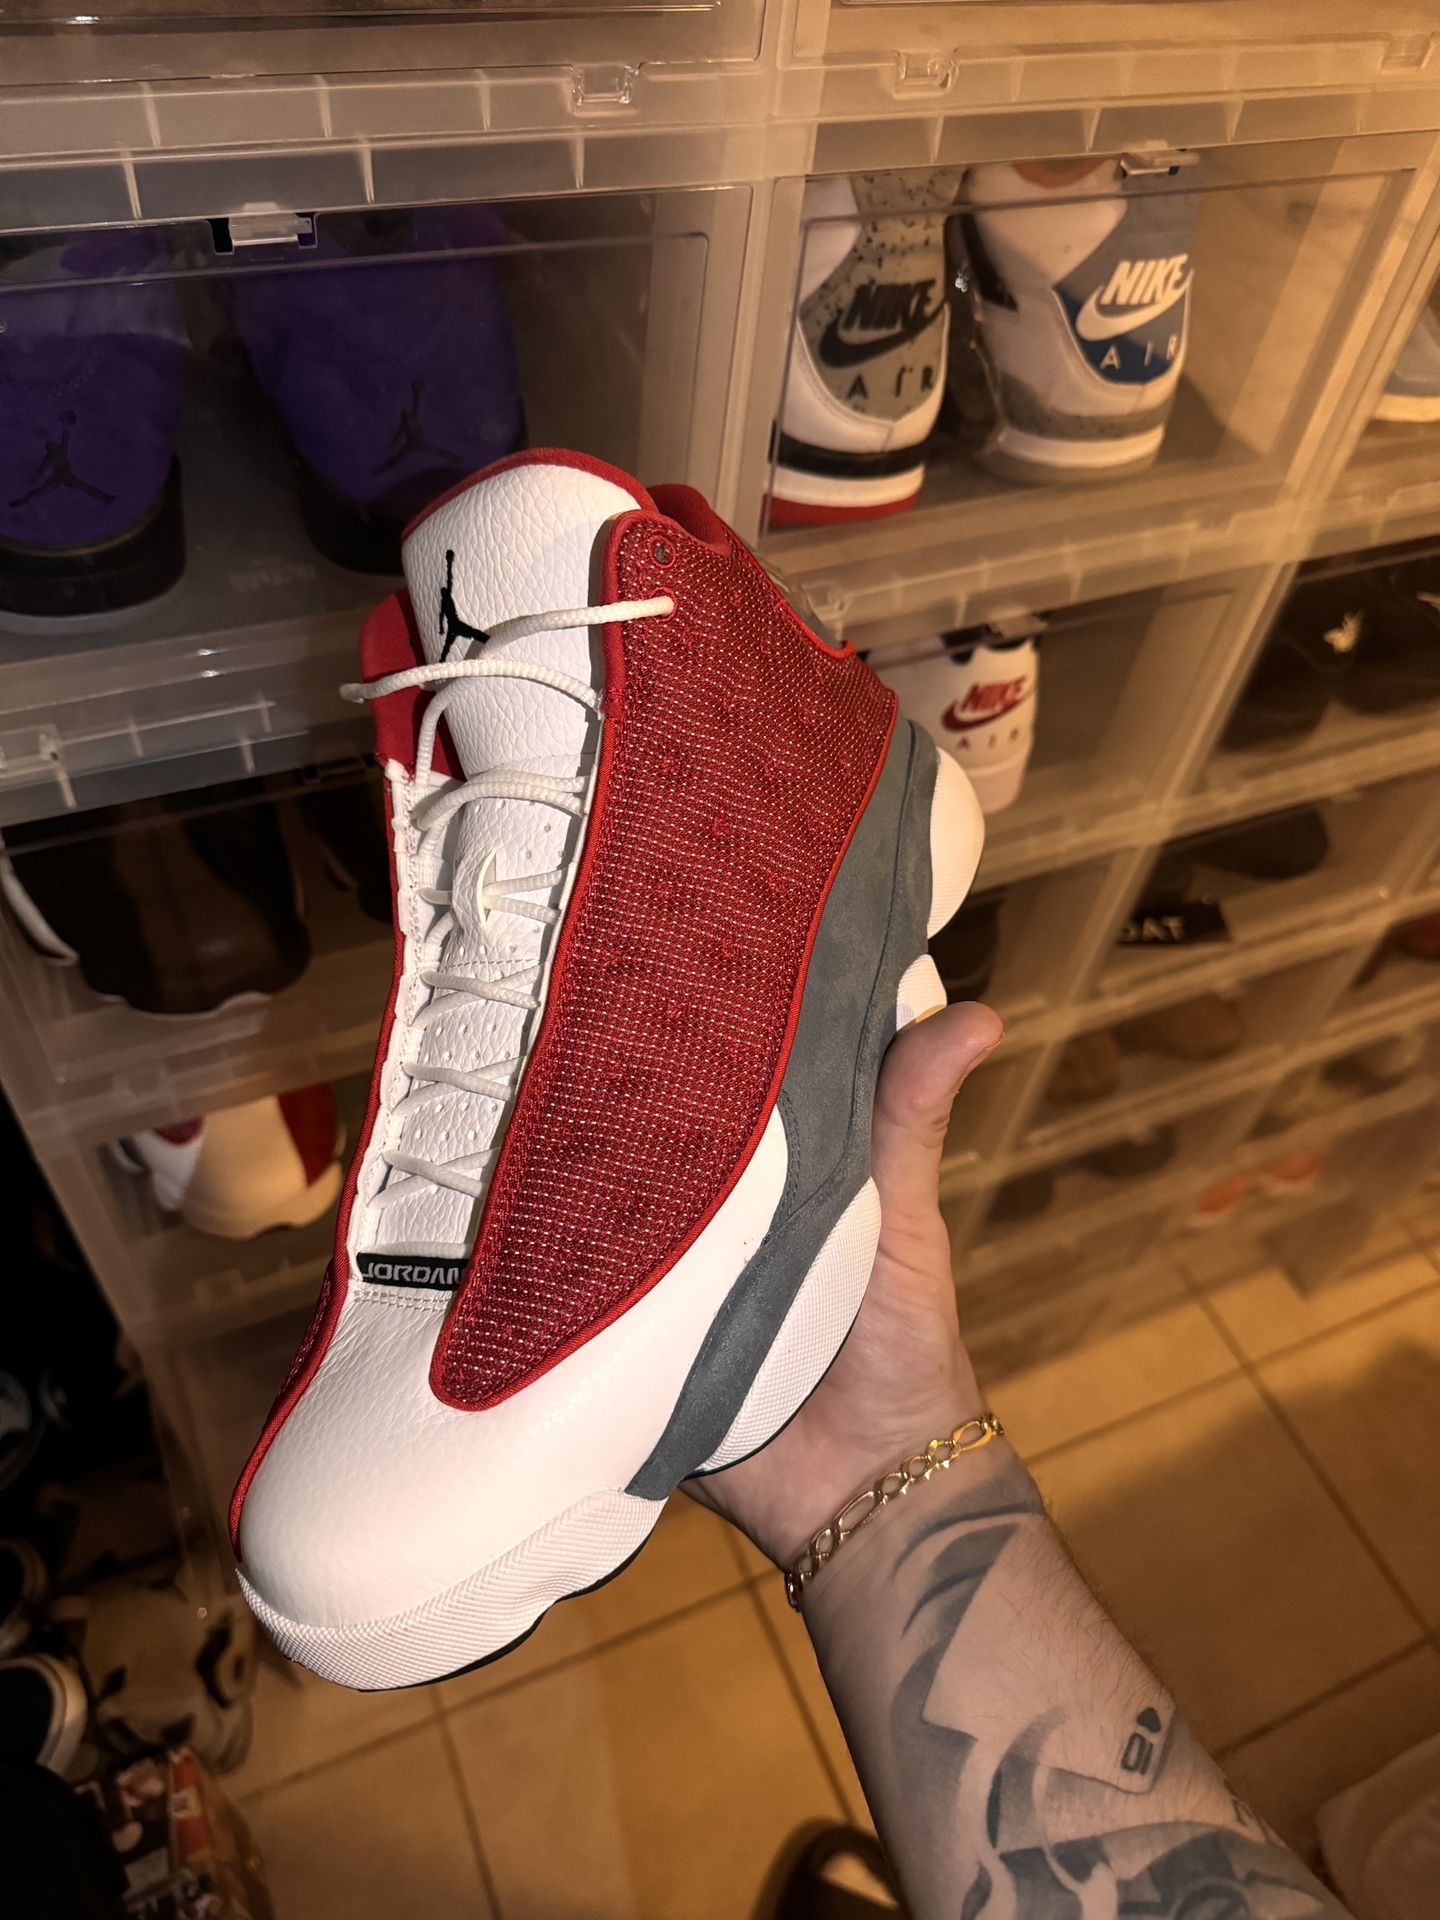 Red Flint Jordan 13s